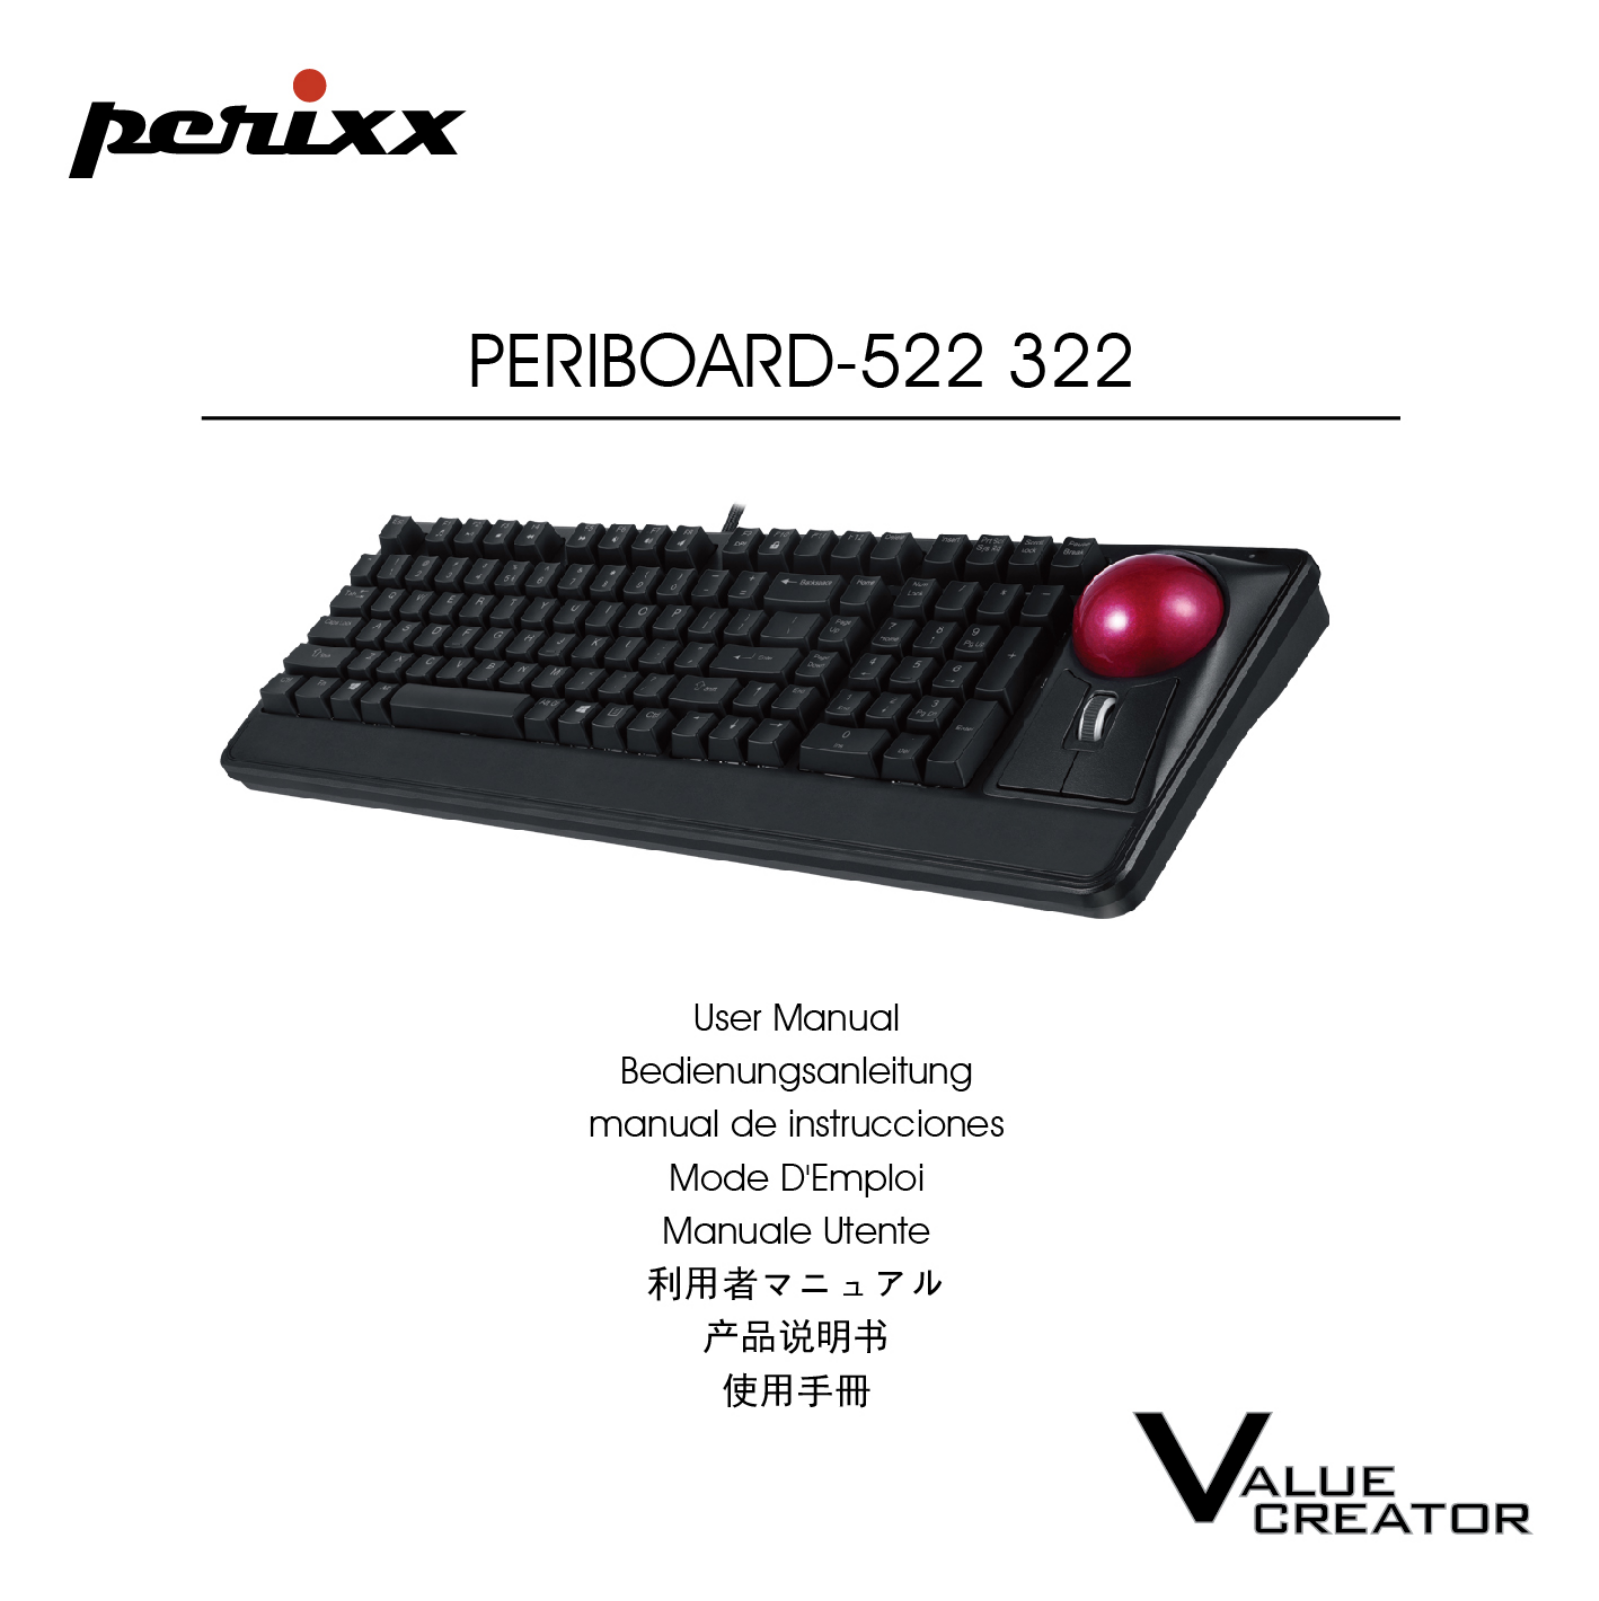 Perixx Periboard-322 operation manual